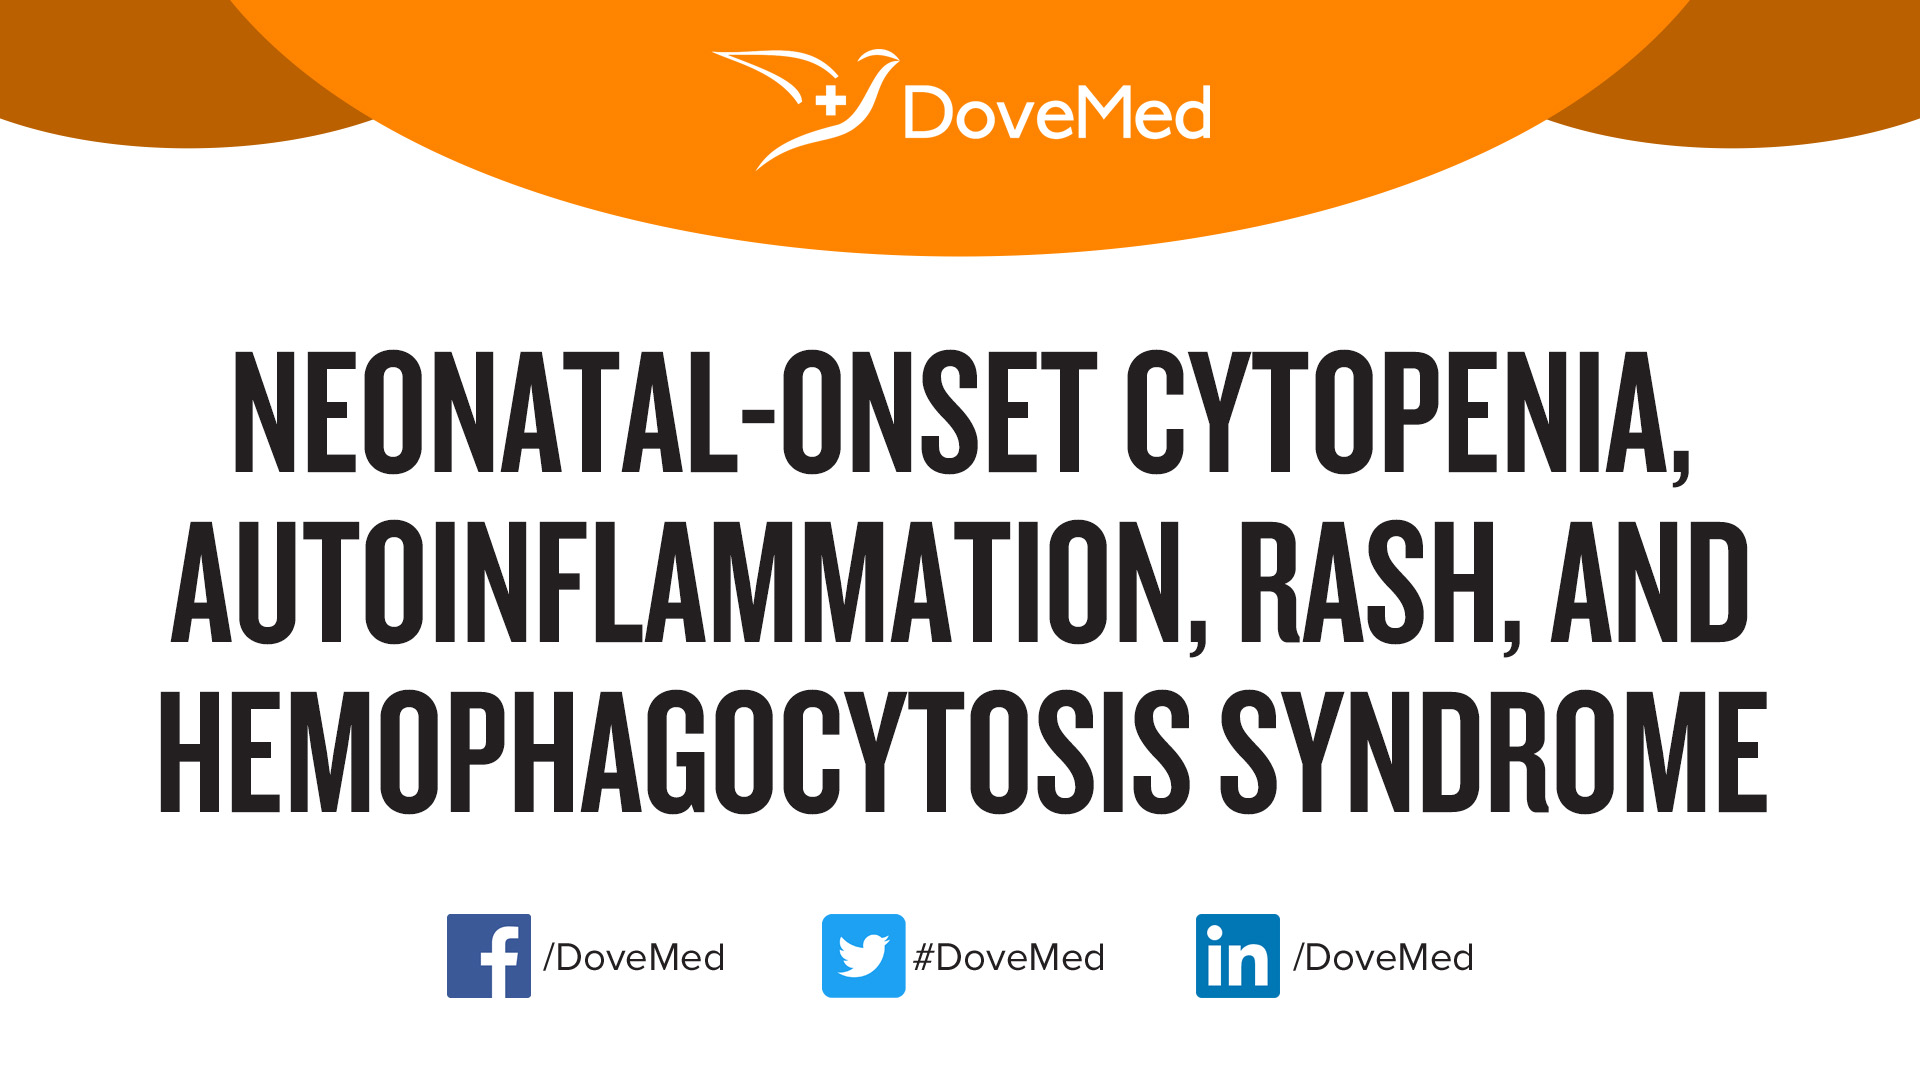 Neonatal Onset Cytopenia Autoinflammation Rash And Hemophagocytosis